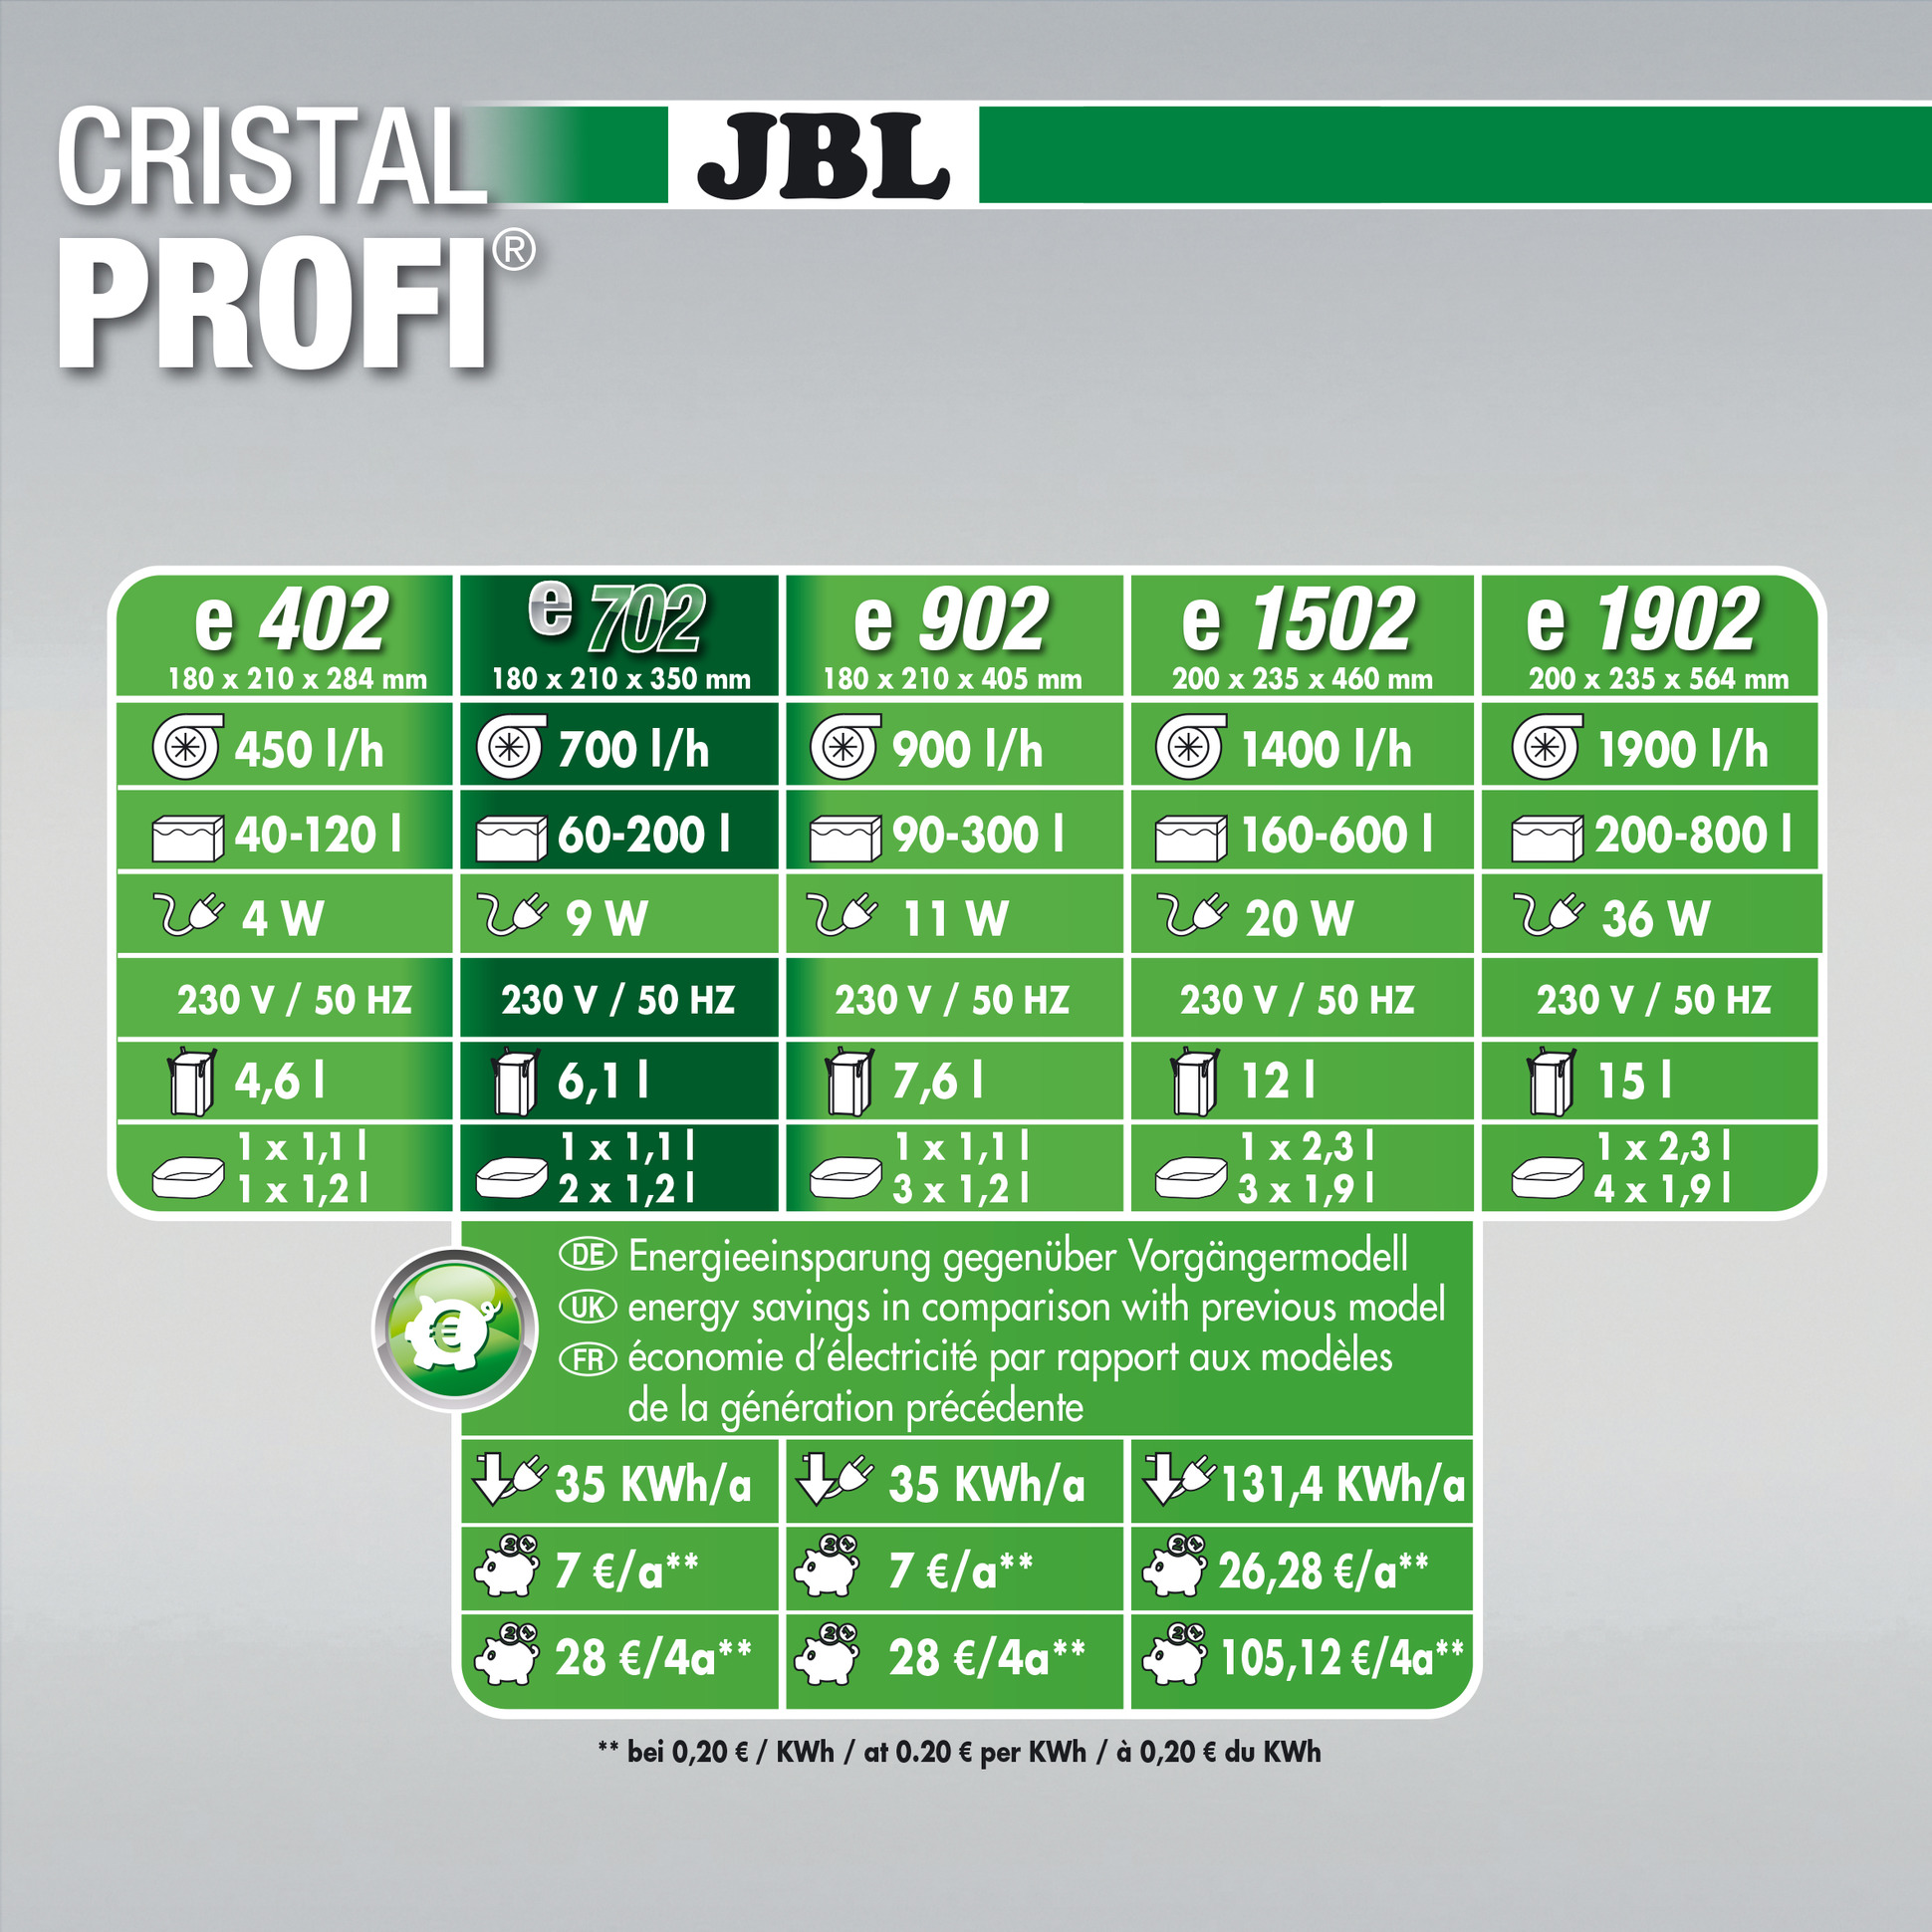 JBL Cristal Profi e 702 Greenline Außenfilter